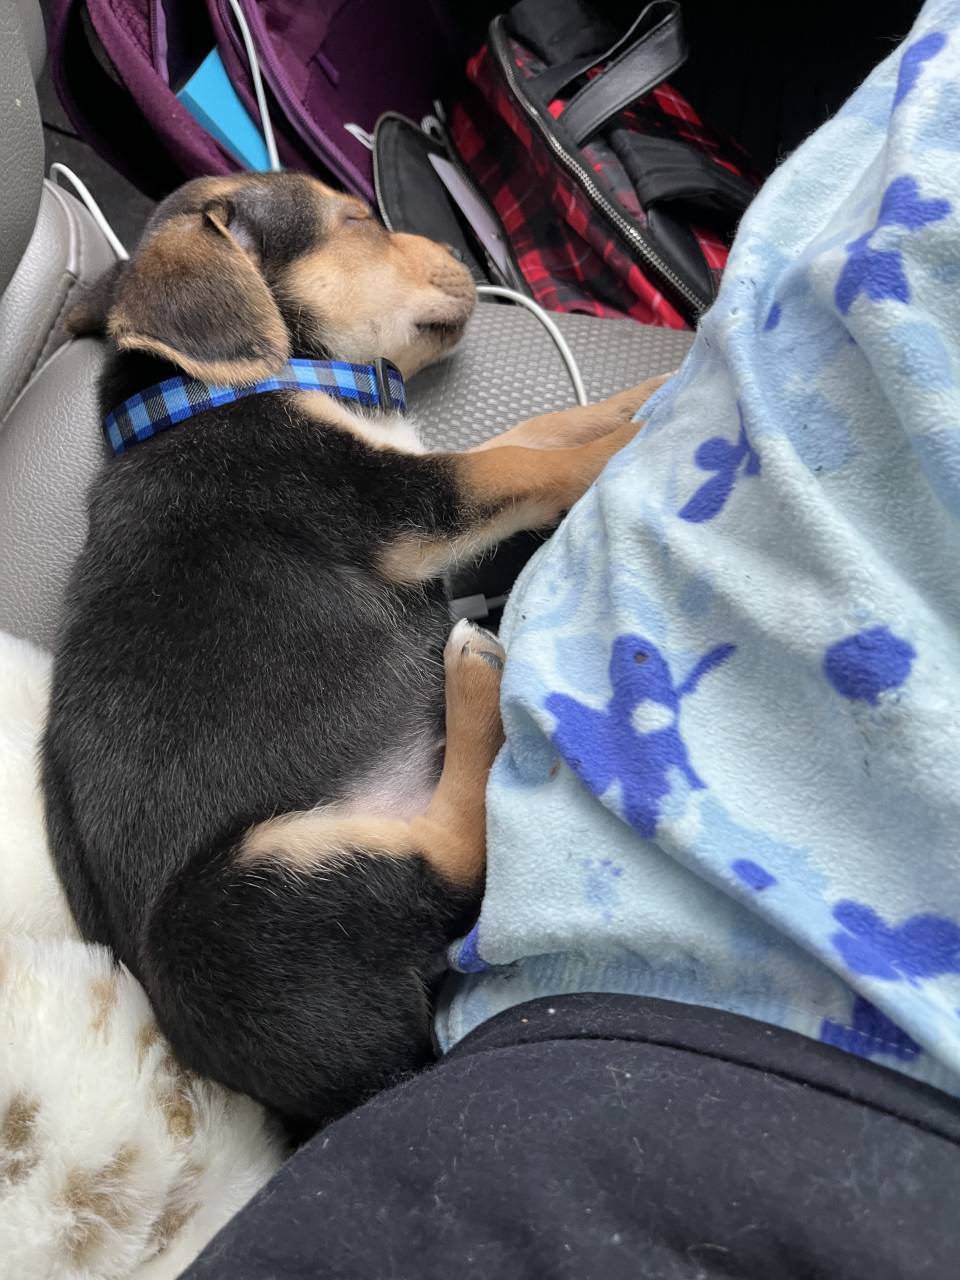 Chihuahua/beagle named Chico